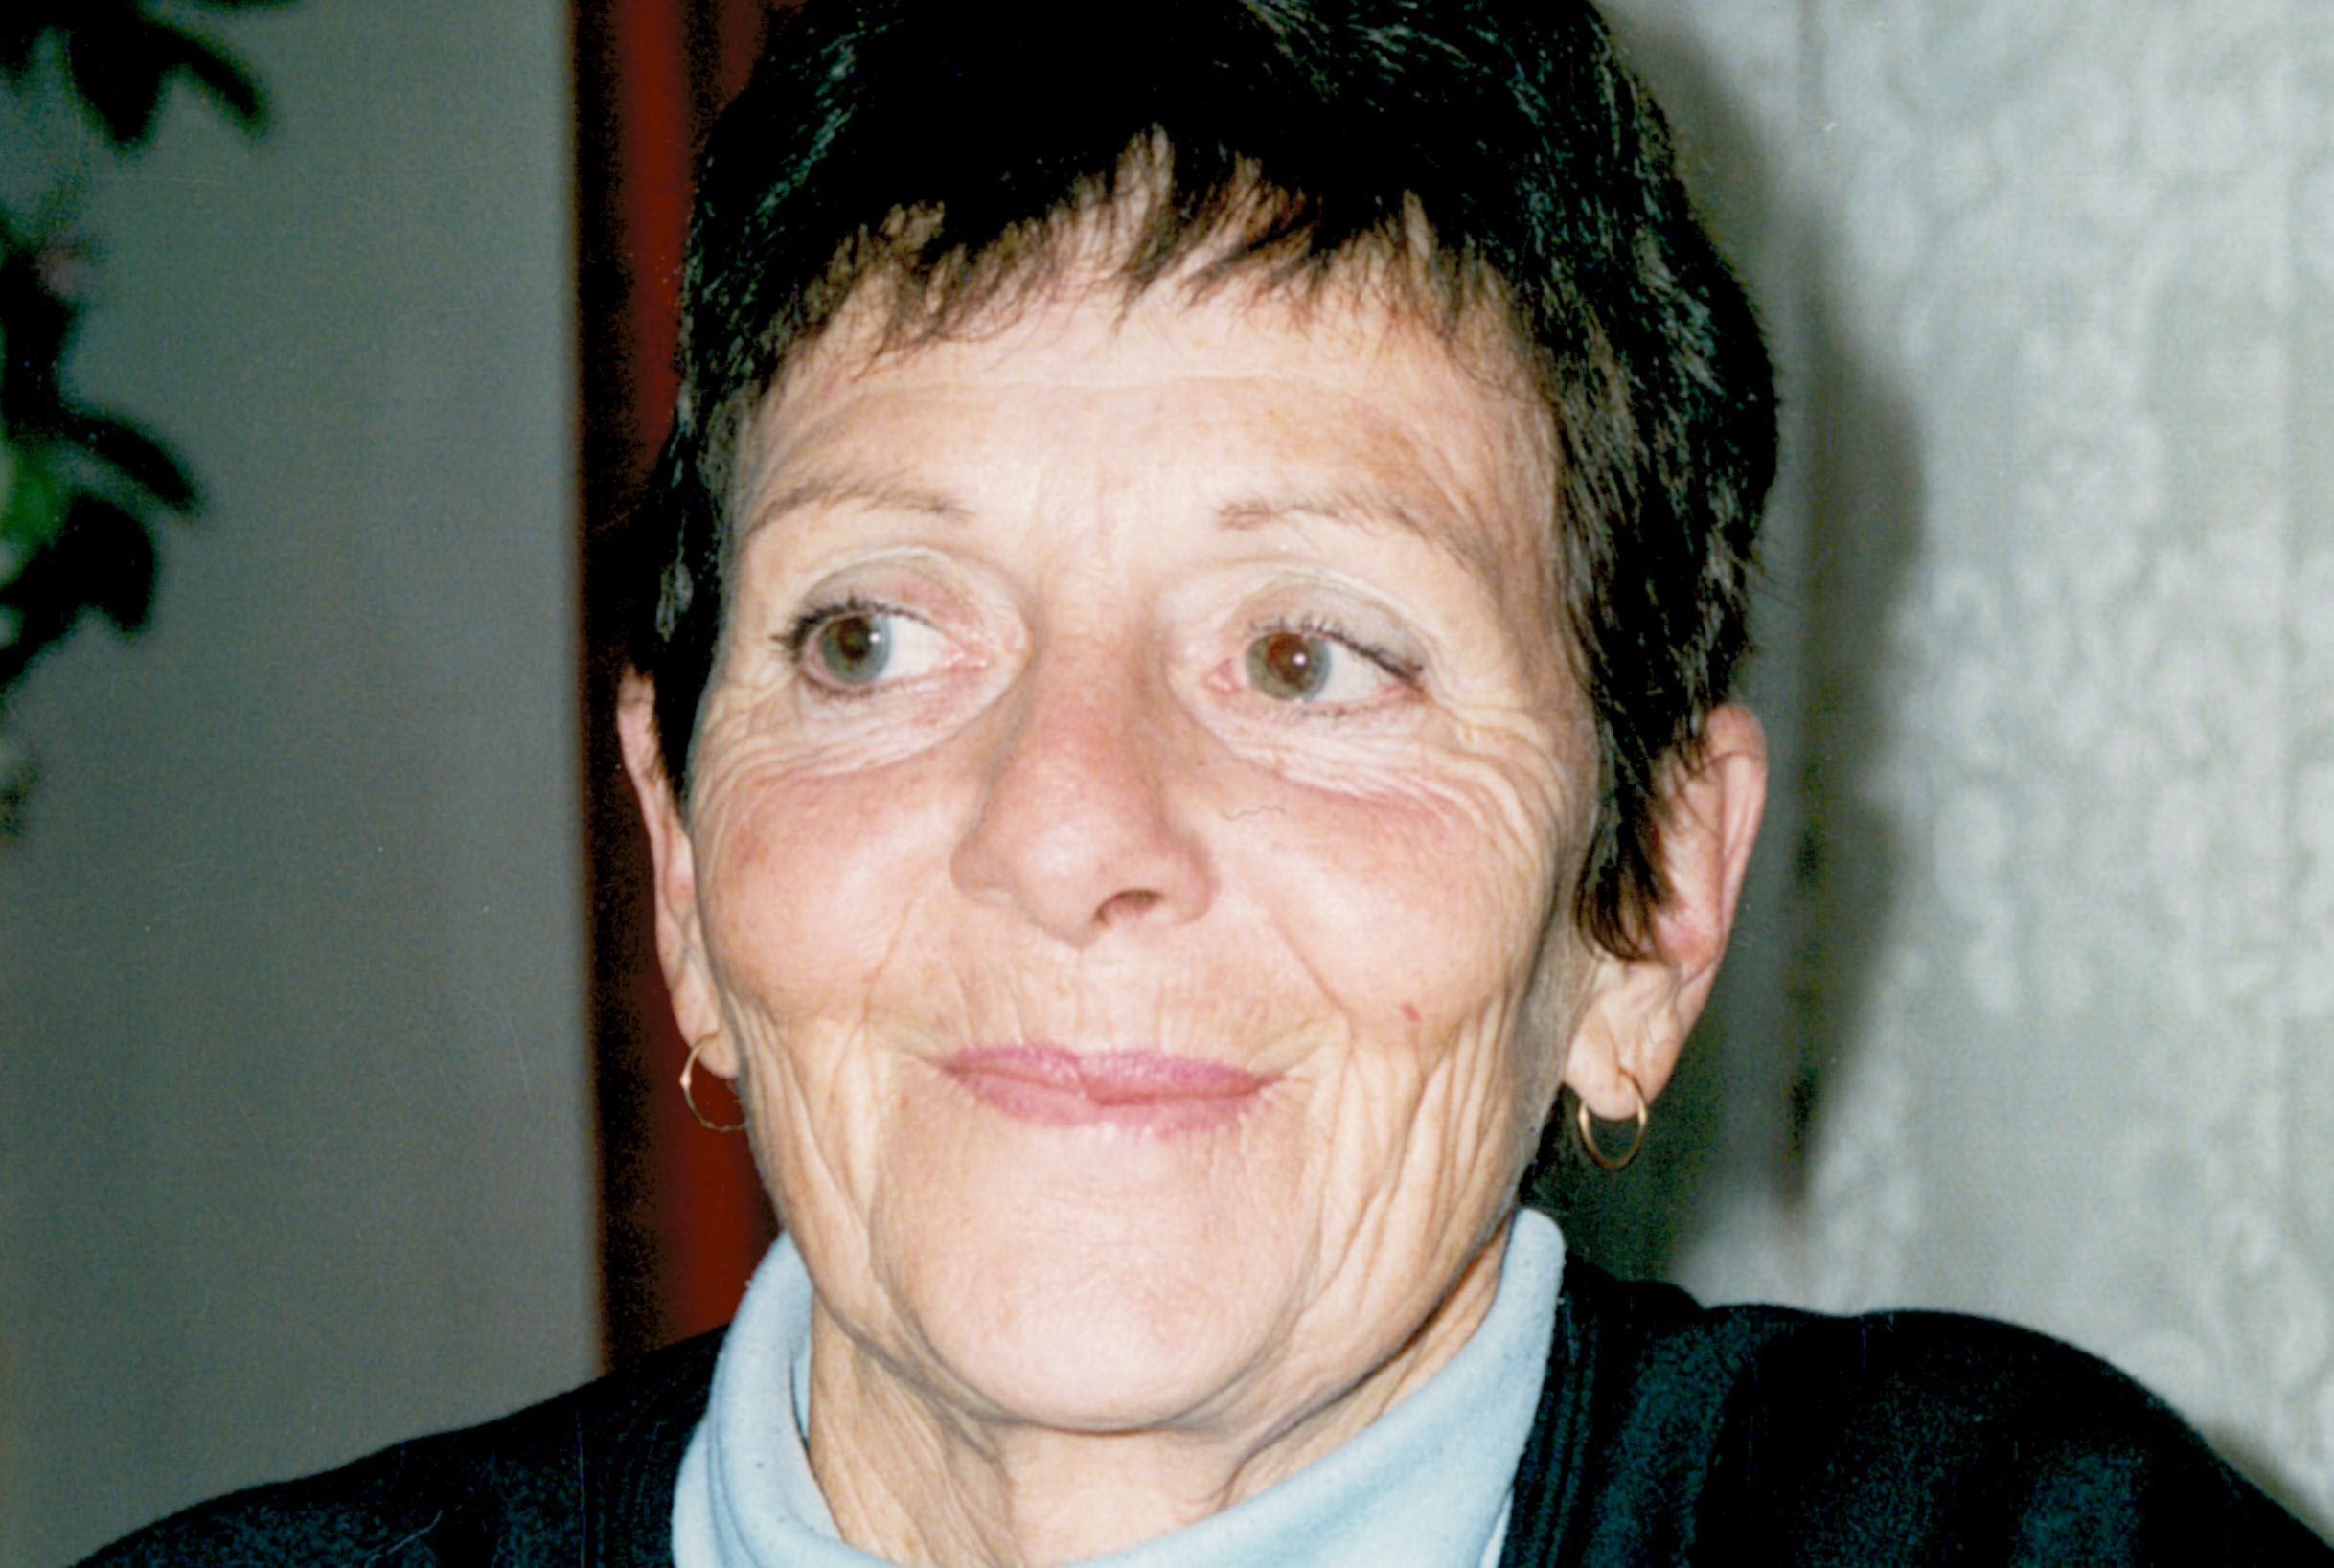 June Kelly